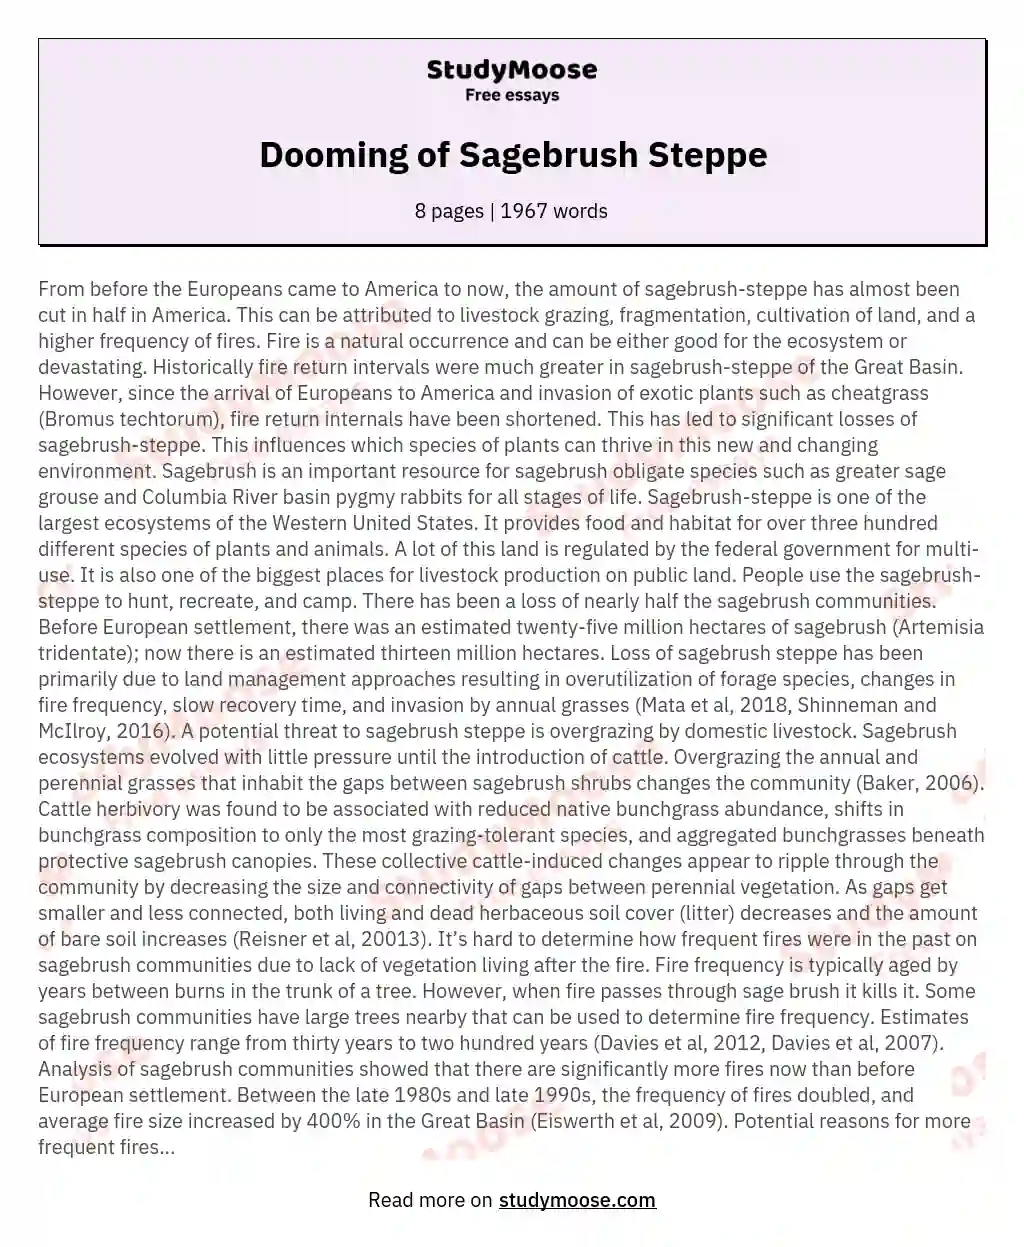 Dooming of Sagebrush Steppe essay